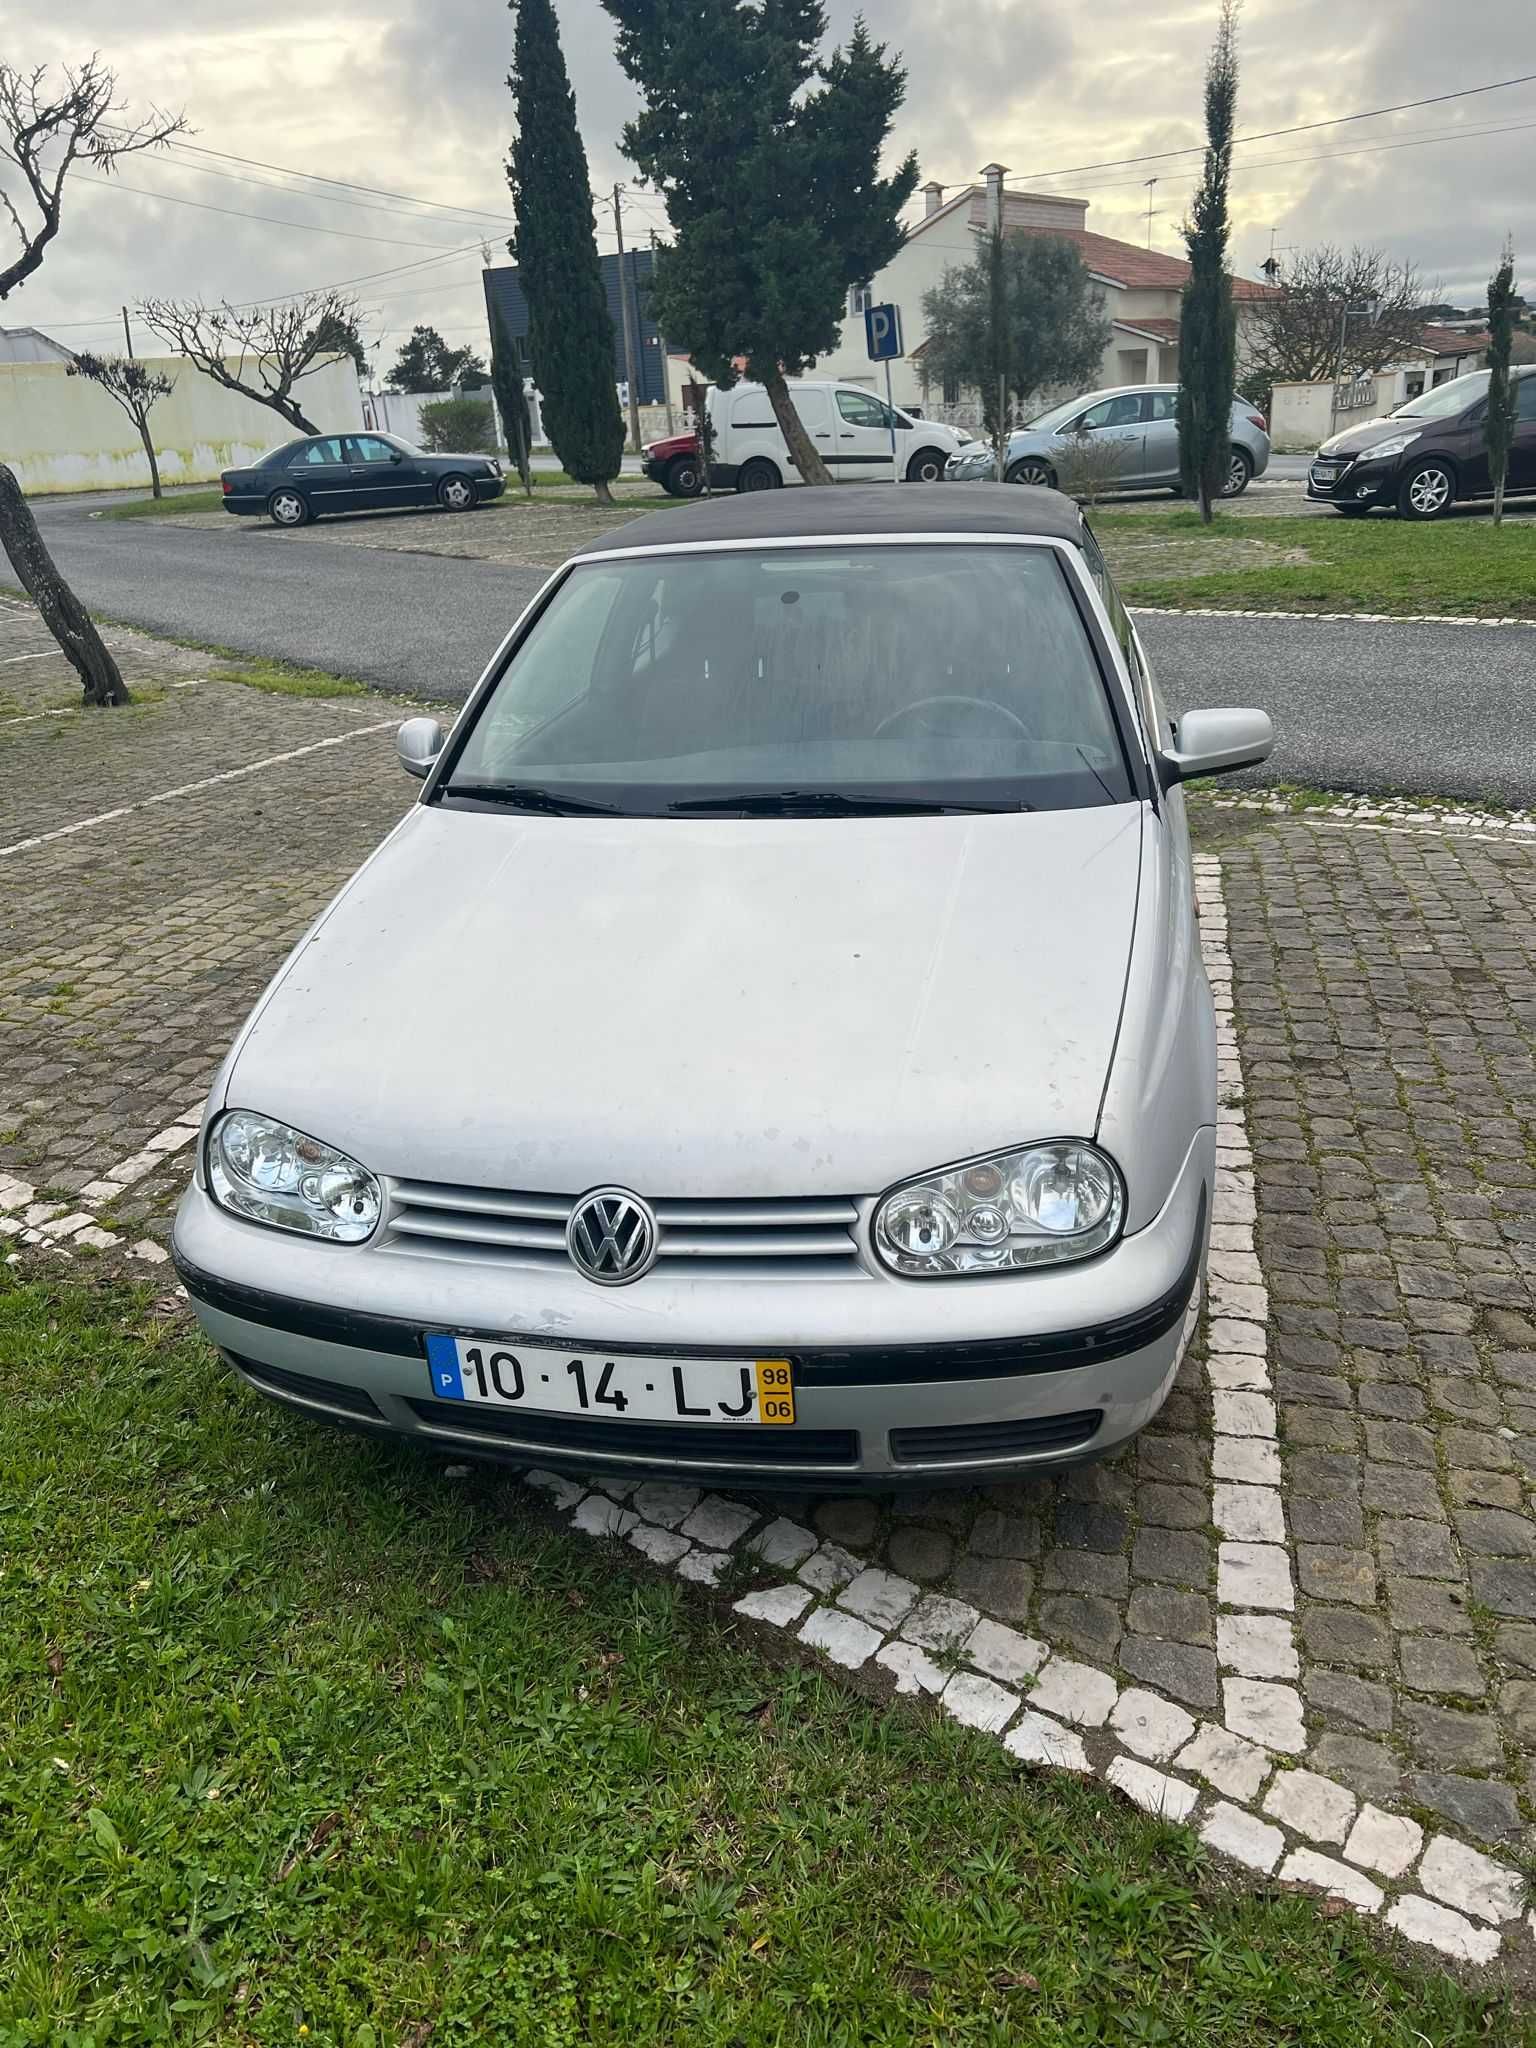 VW Golf Cabrio cinza